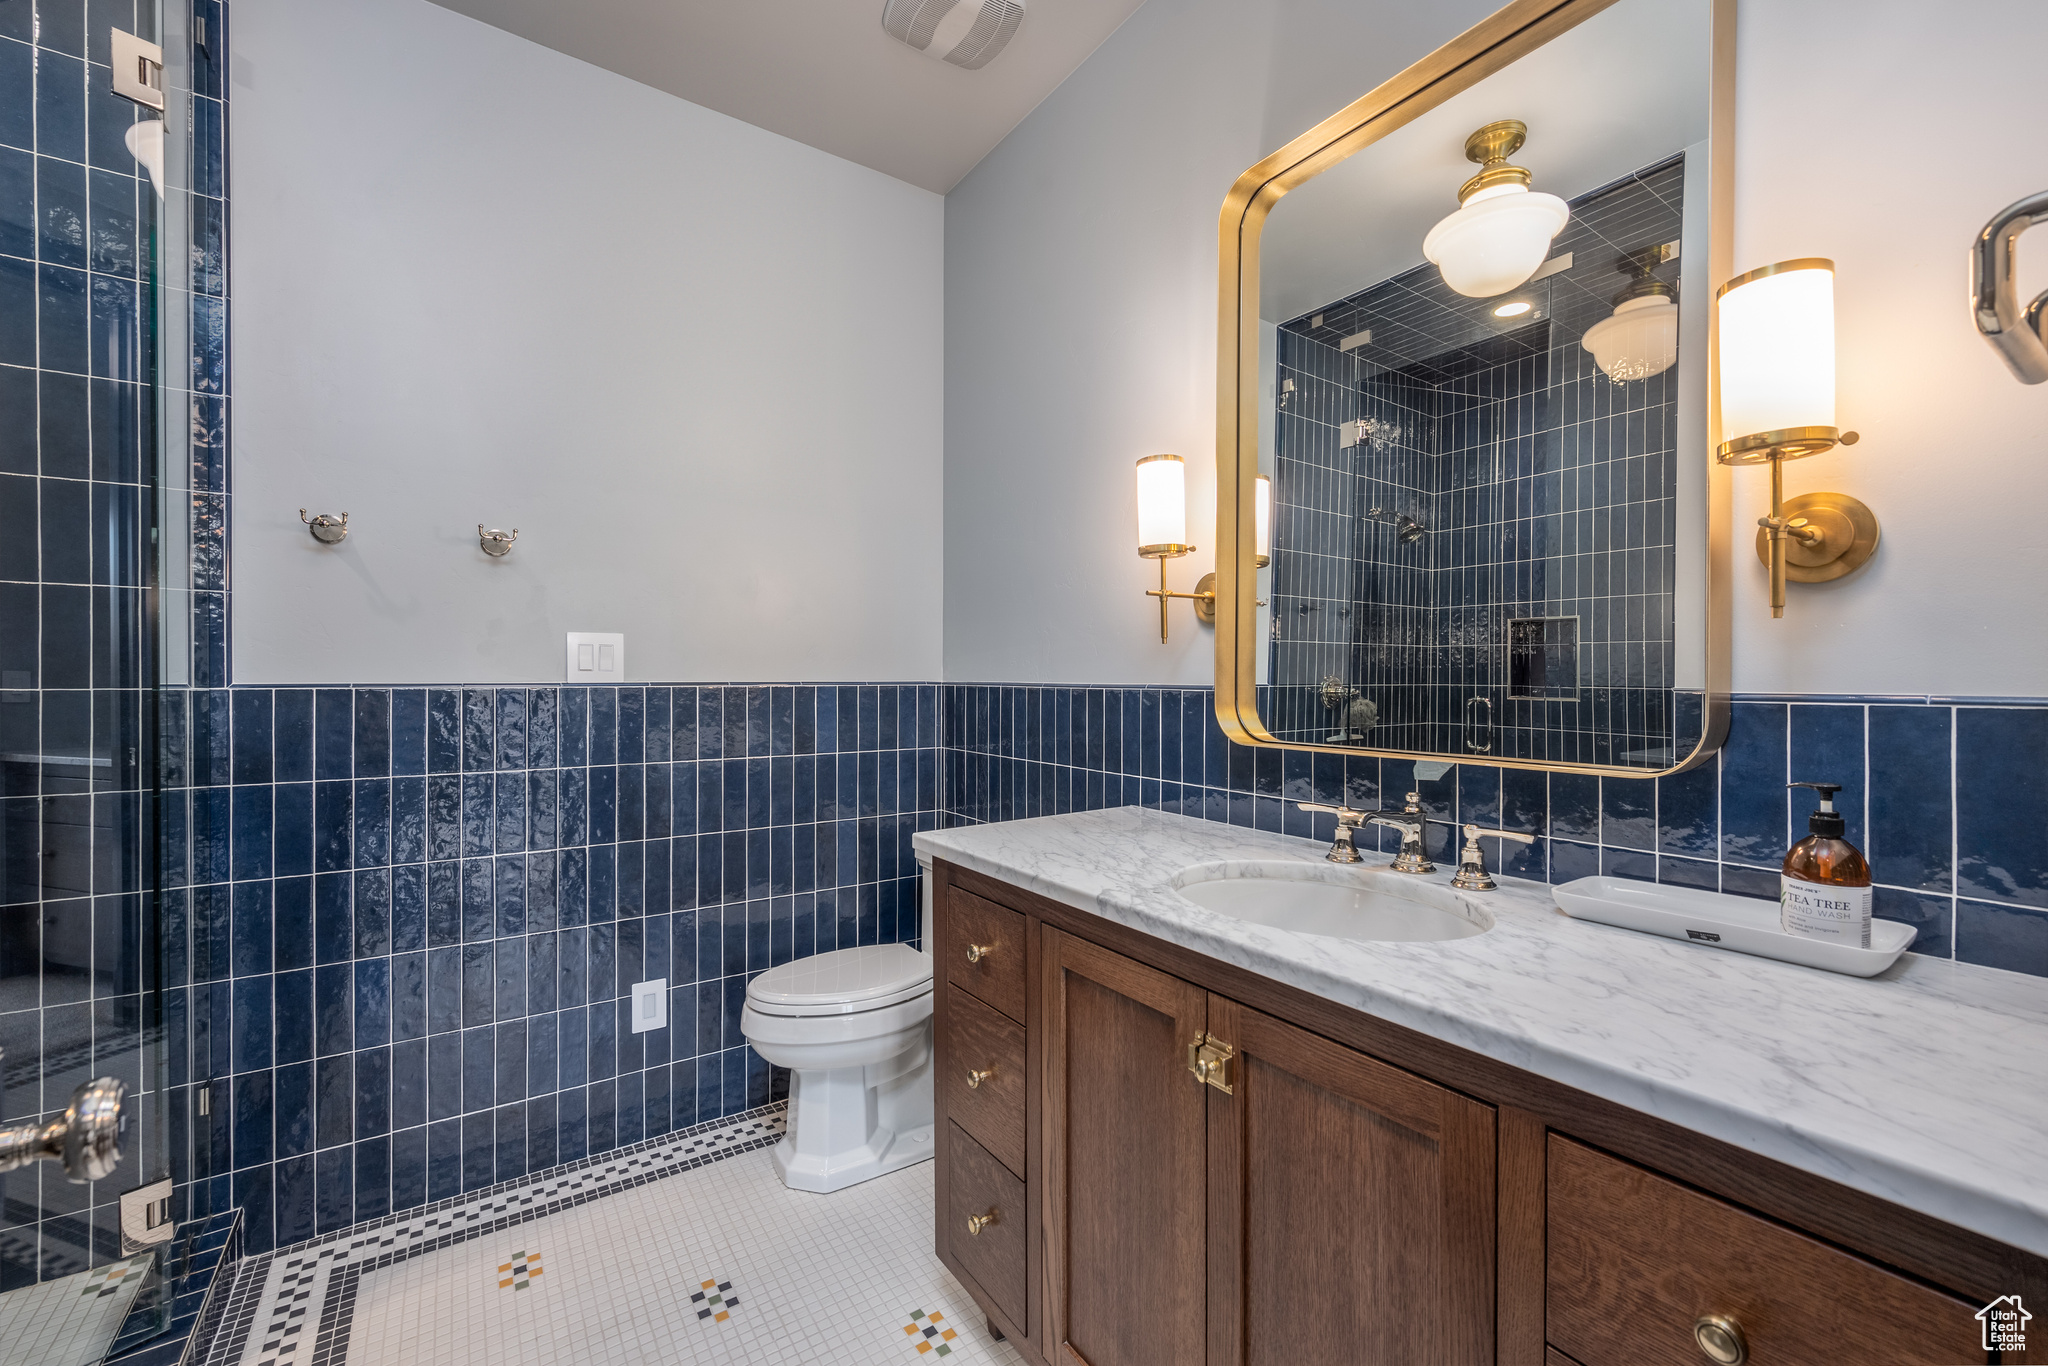 Bathroom with tasteful backsplash, toilet, vanity, and tile walls